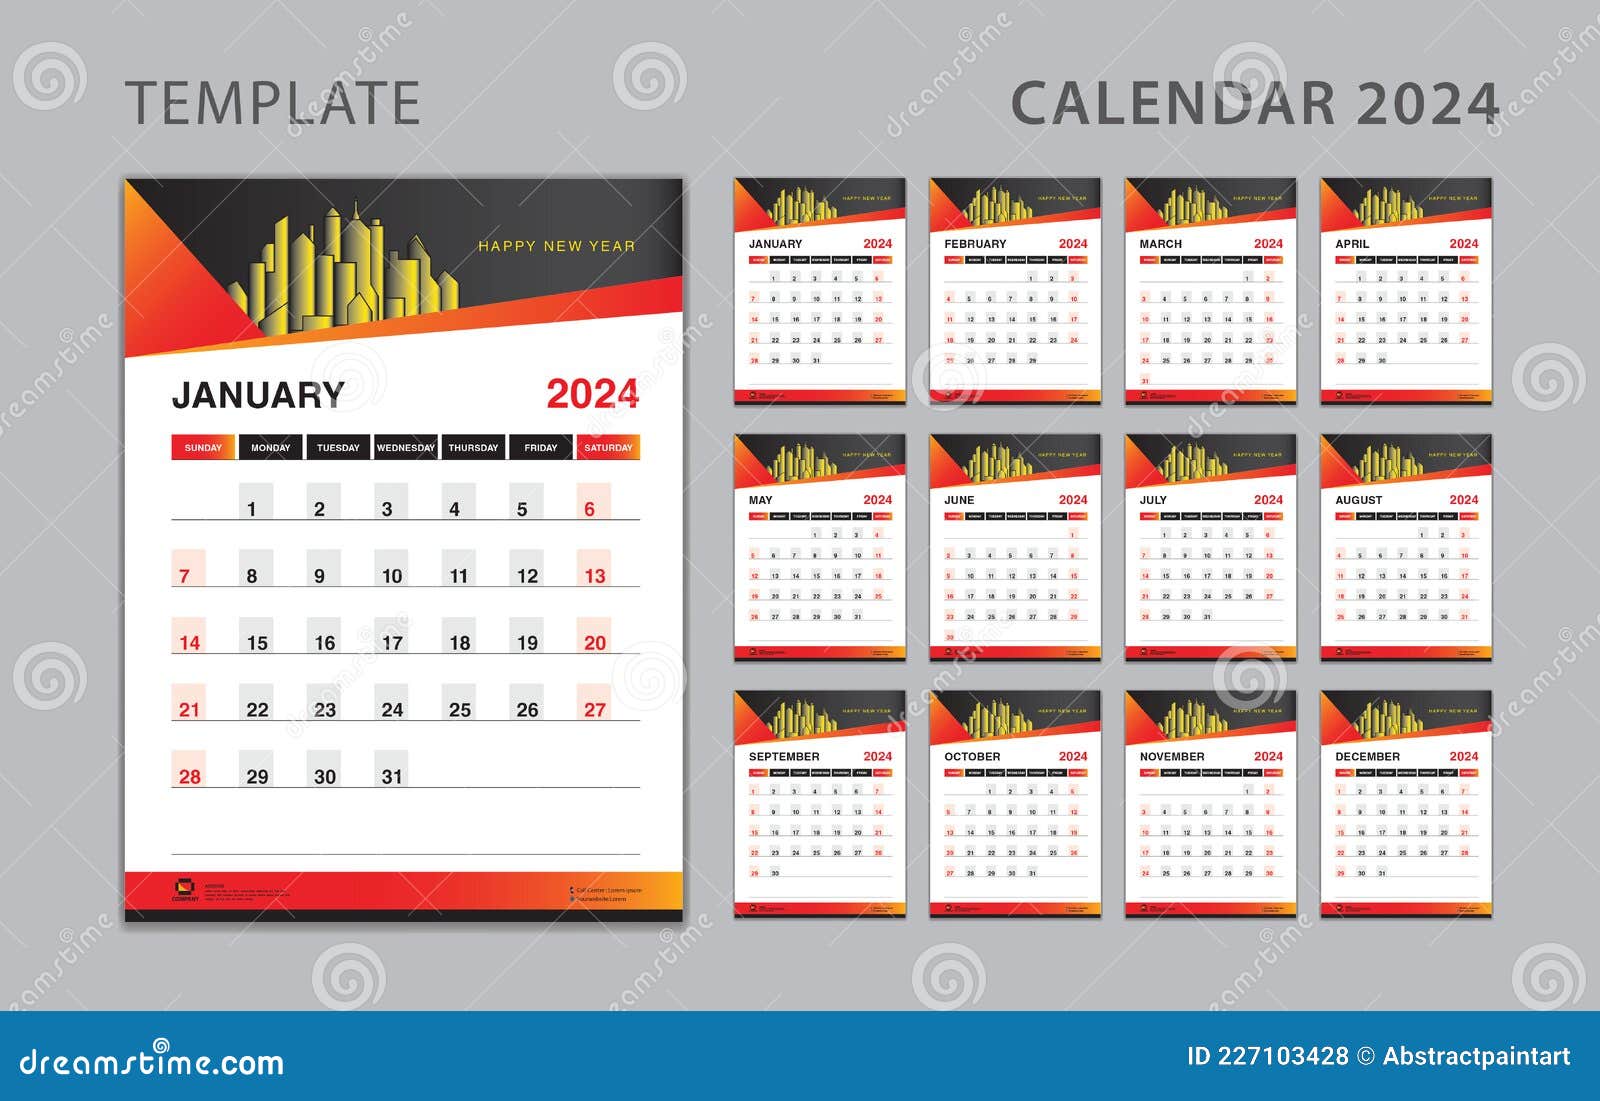 Календарь на 2024 часы работы. Макет календаря 2023. Календарь на стену 2023. Настенный календарь 2024. Дизайн календаря 2024.